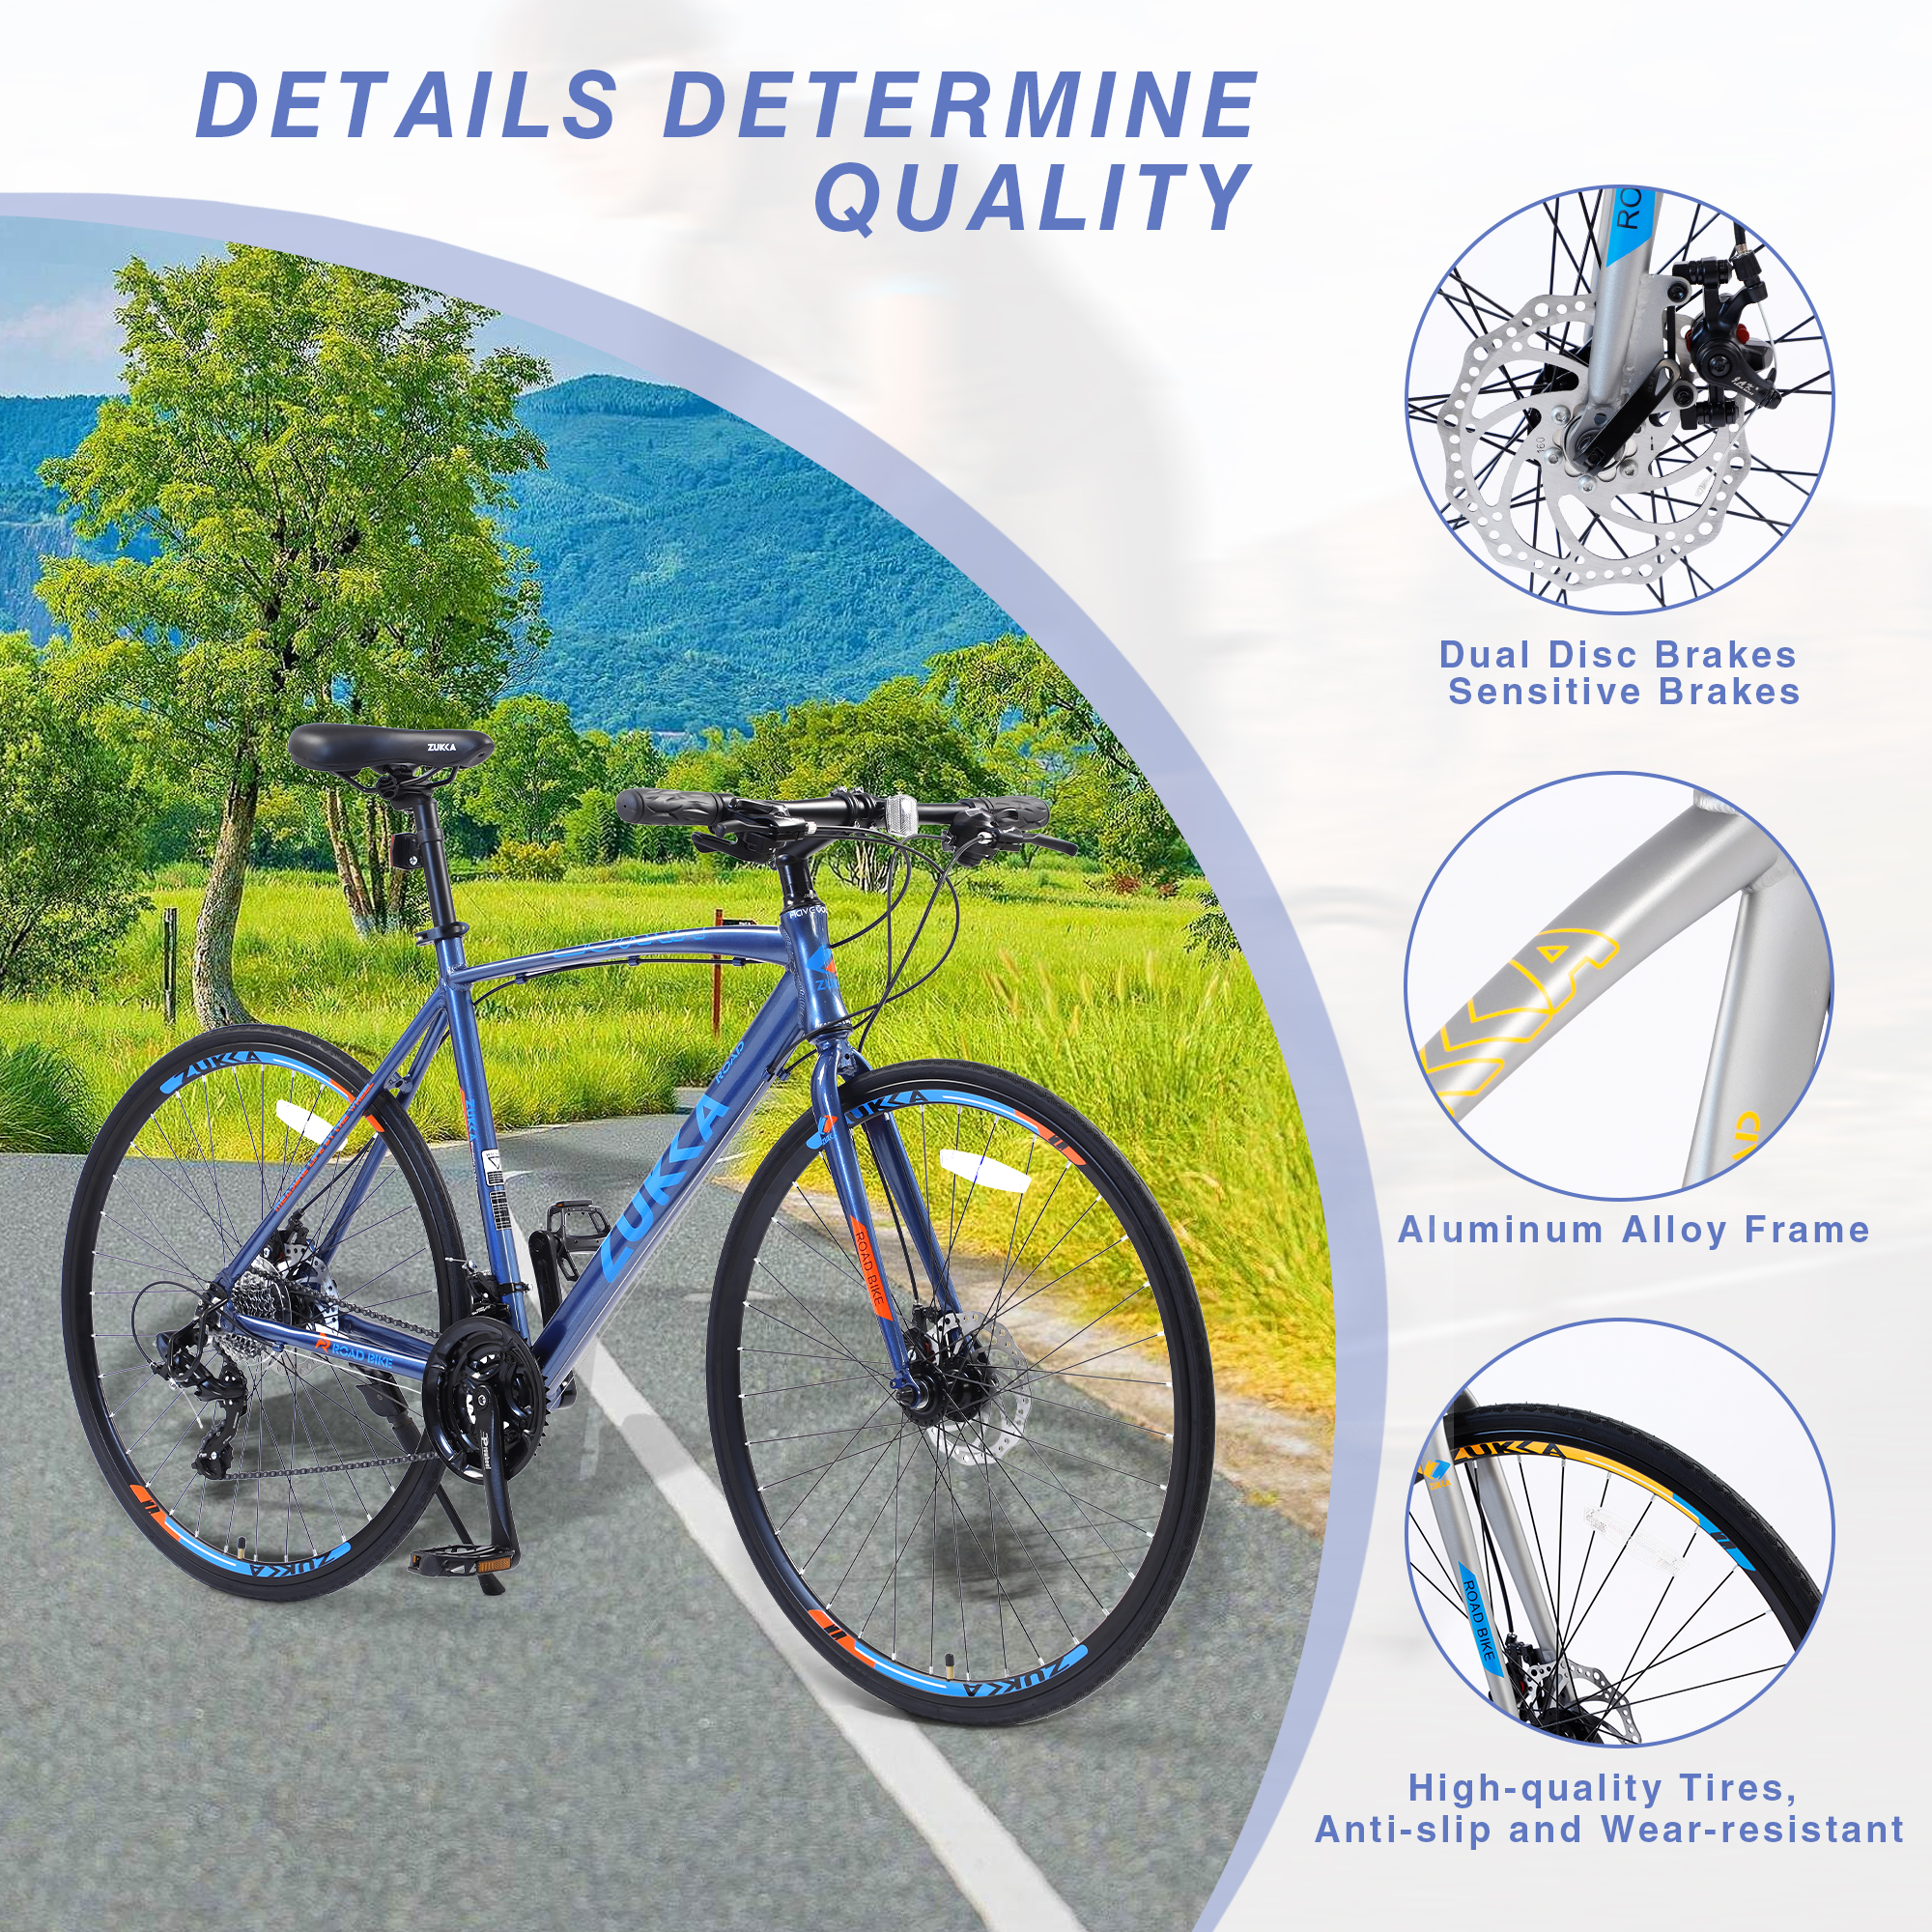 24 Speed Road Bike for Men Women, 700C Aluminum Flat Bar Road Bike with Disc Brakes, Blue - image 3 of 6